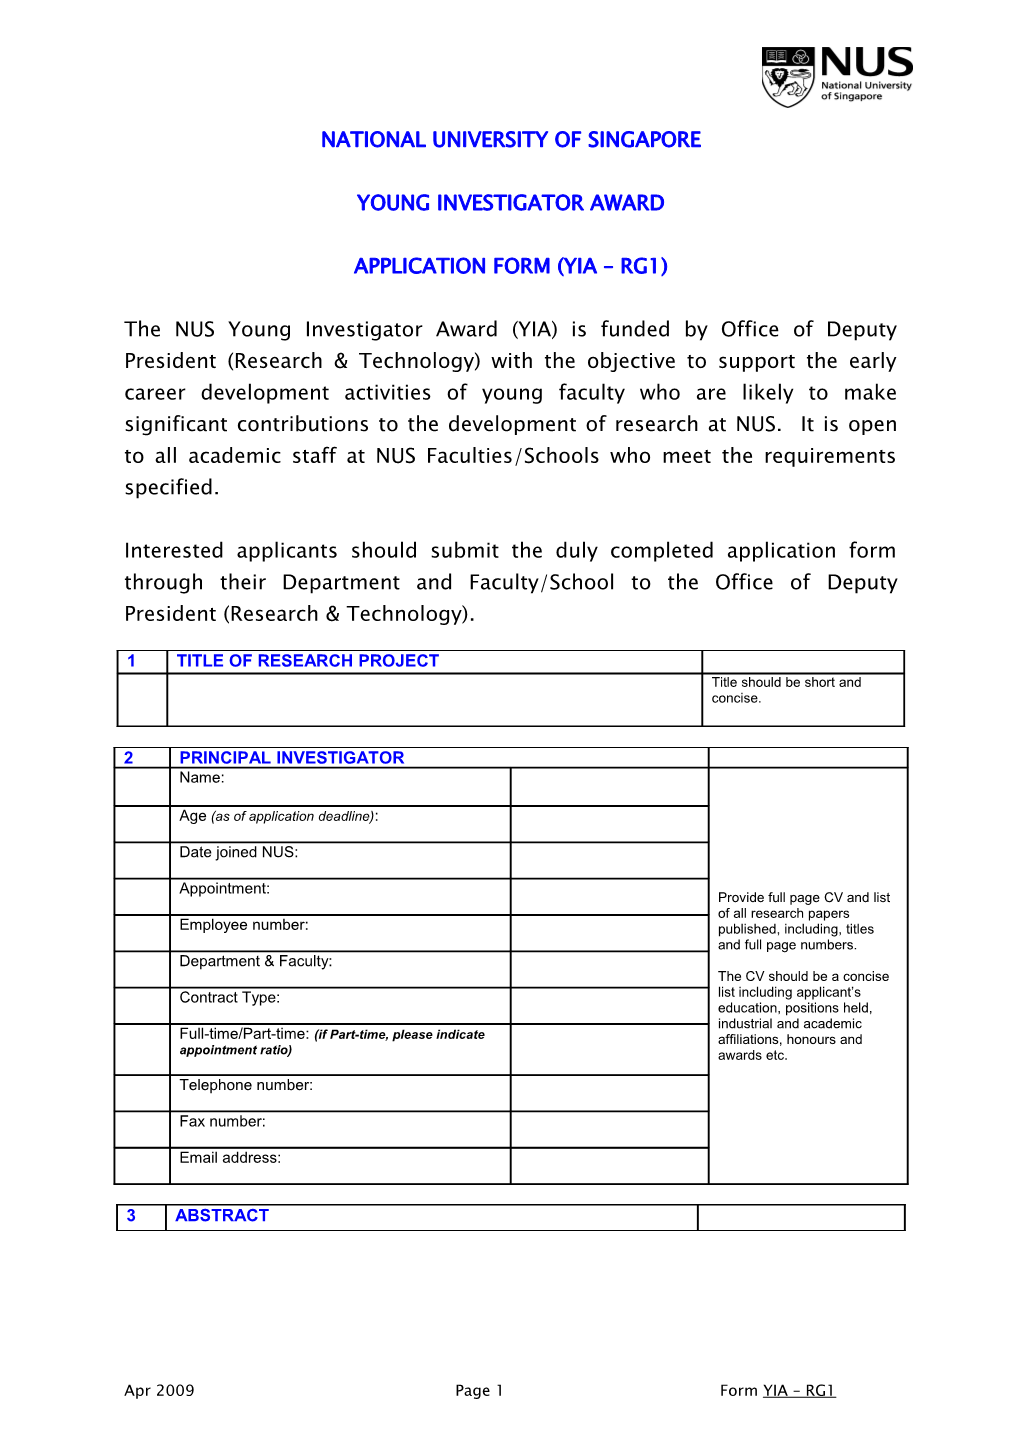 YIA - Application Form